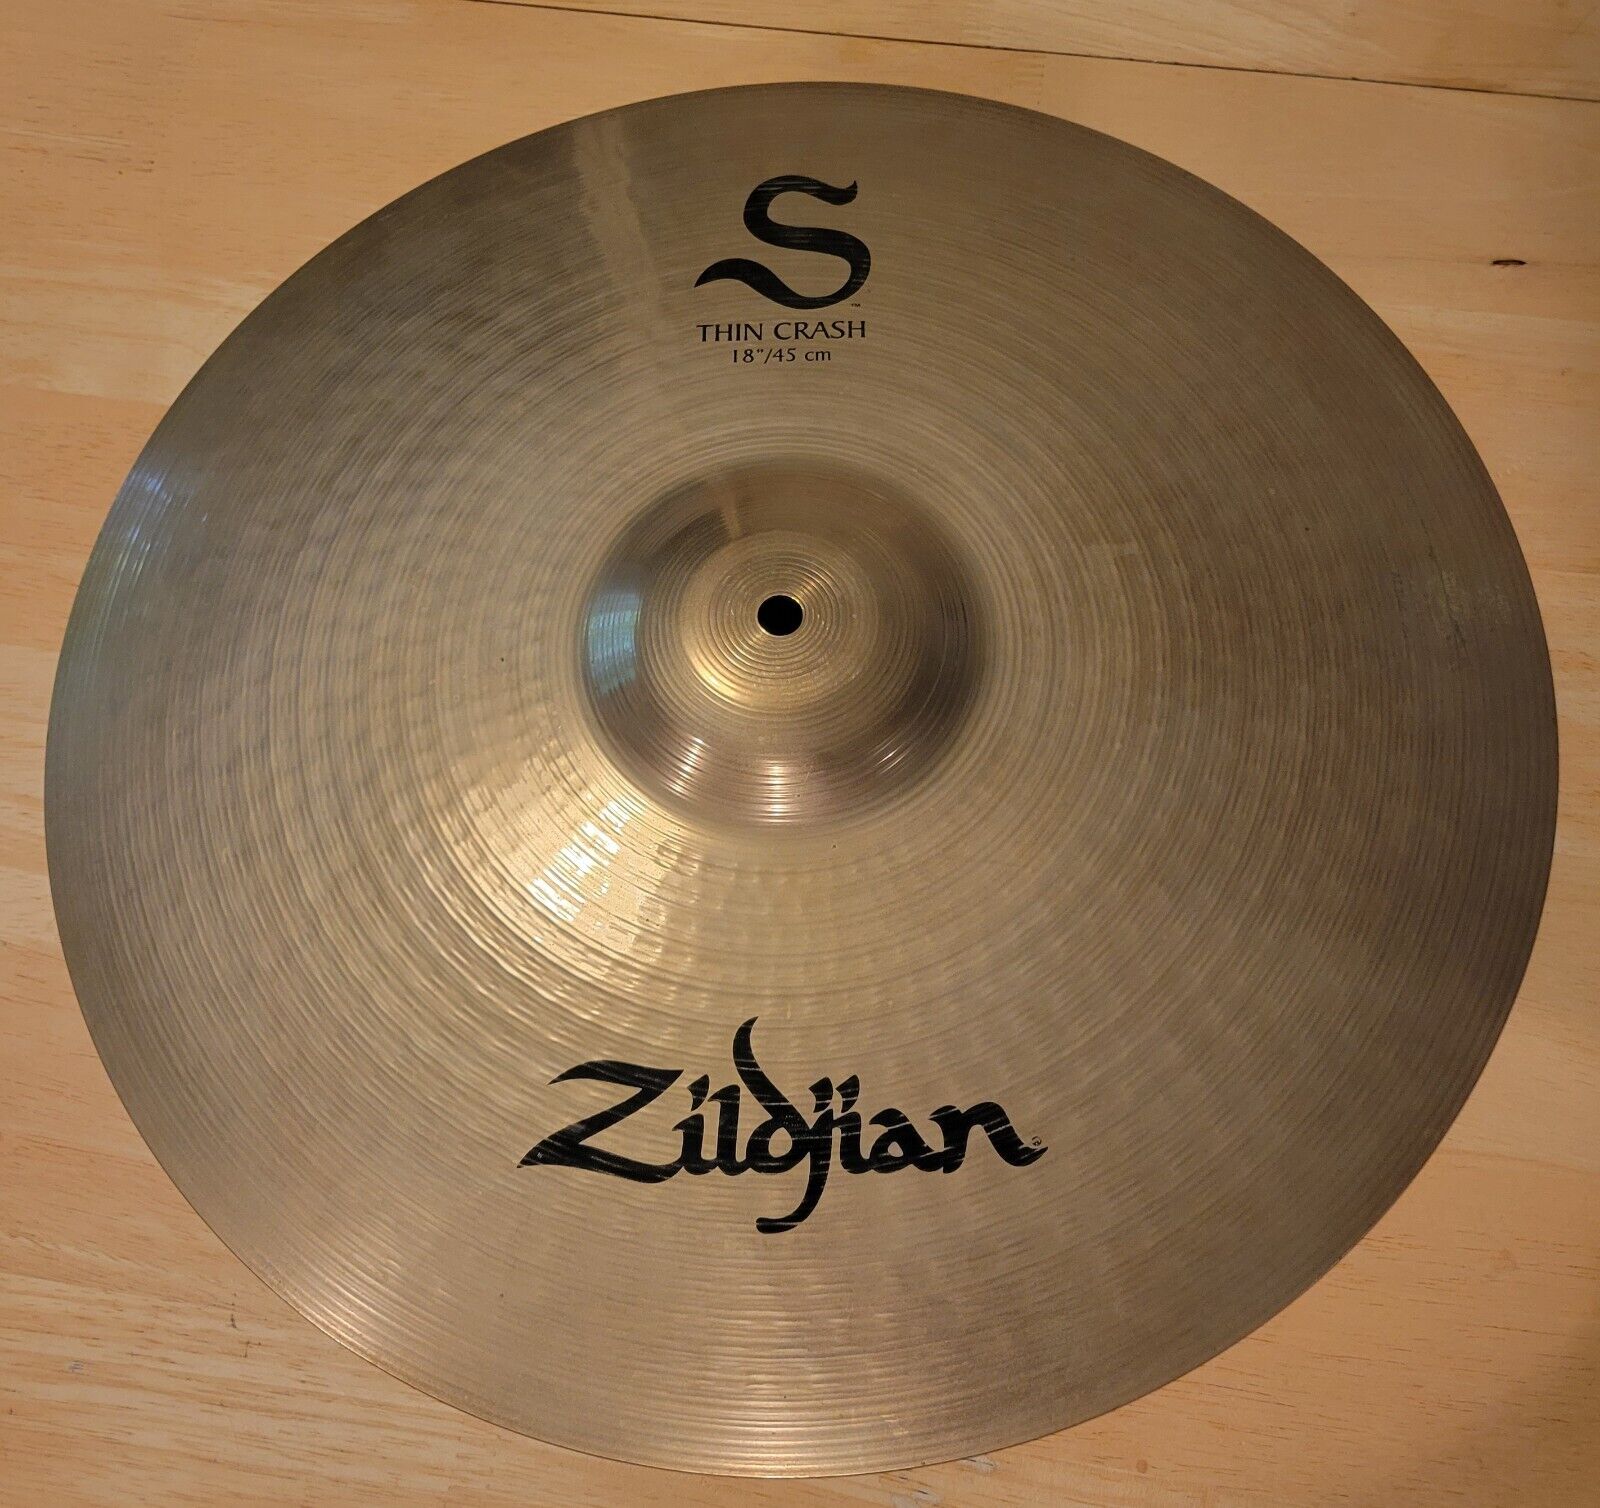 Zildjian S Series Thin Crash 18 Inch Cymbal Very Good Condition